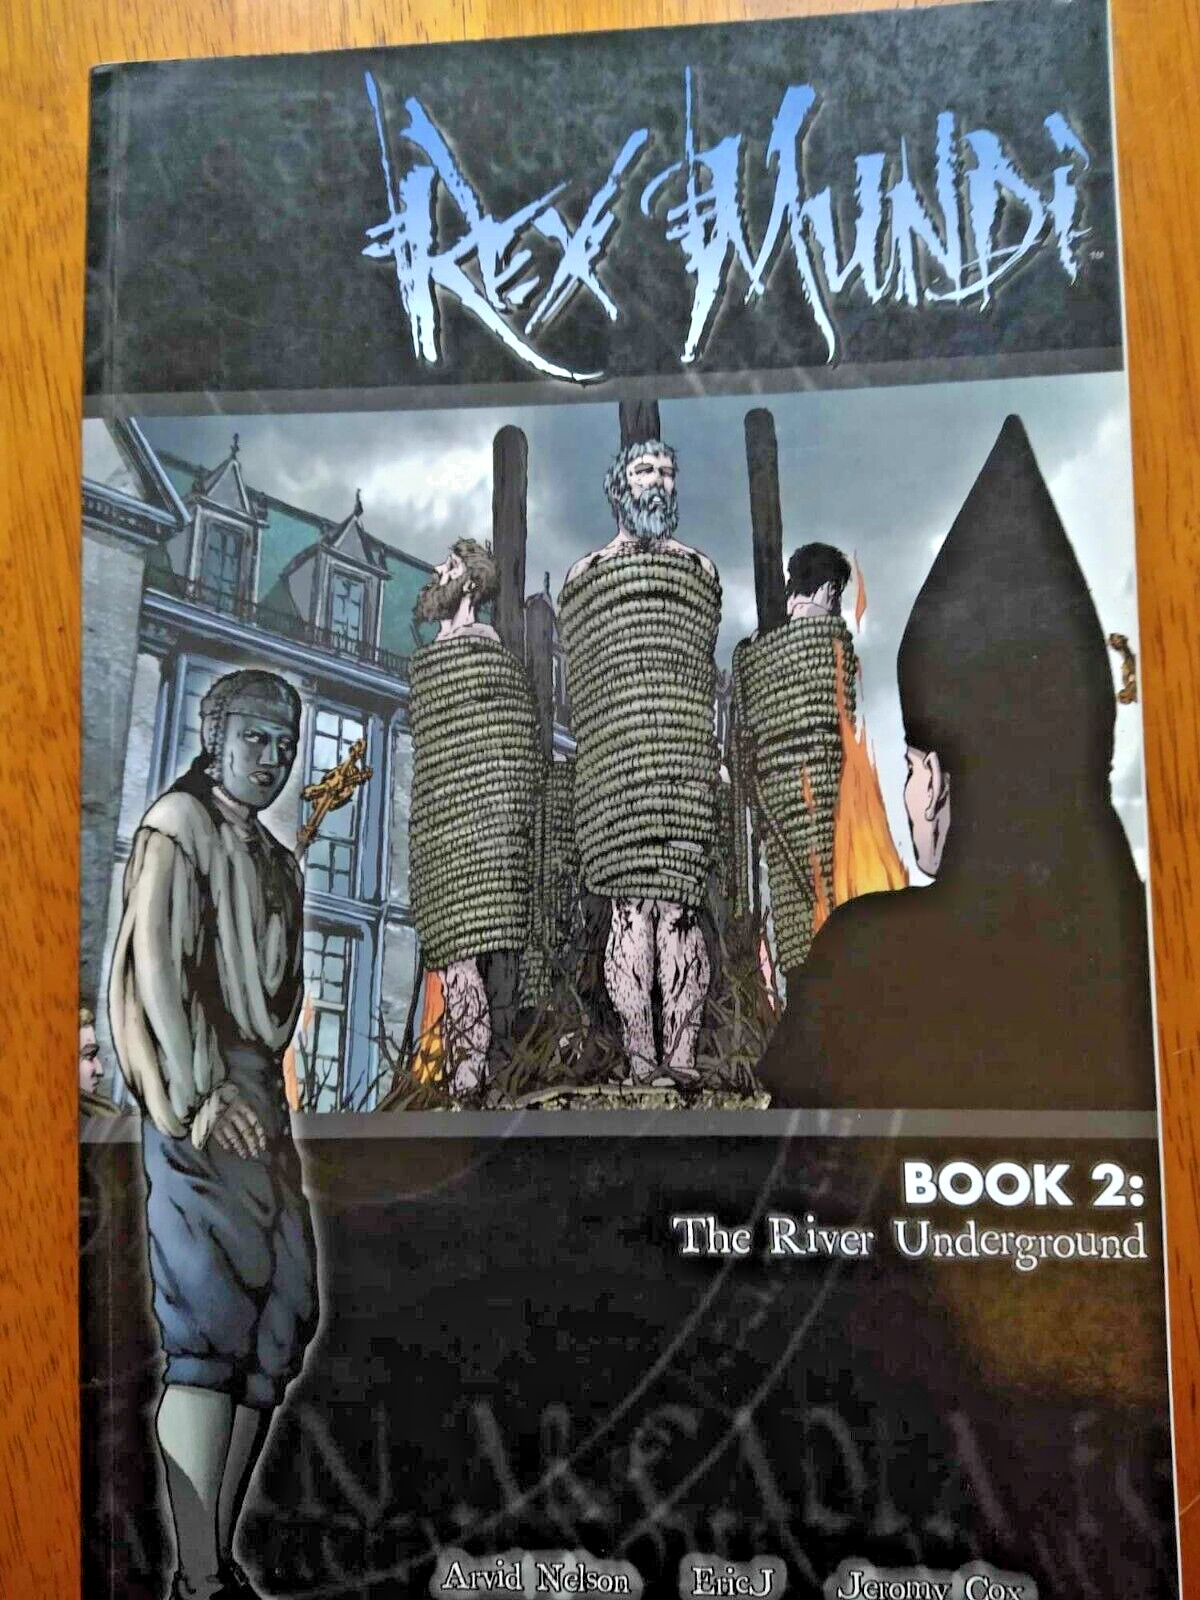 Rex Mundi Volume 2: The River Underground Trade paperback Graphic Novel Image